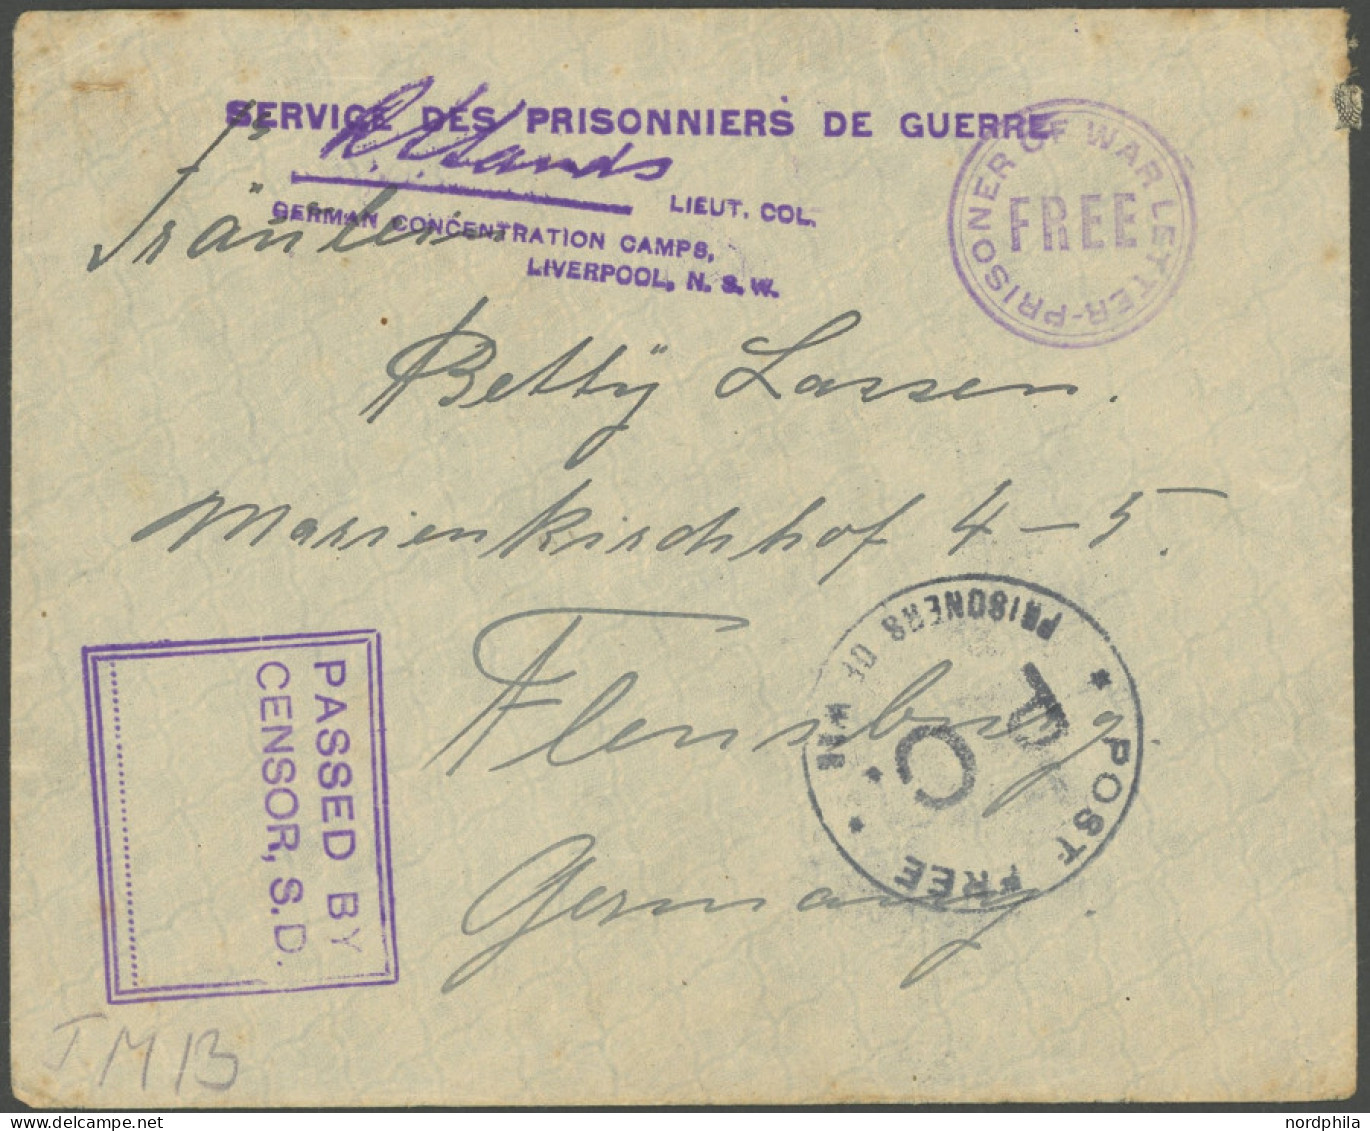 DEUTSCH-NEUGUINEA 1916, Brief Aus Dem Lager Trial Bay Mit Violettem Zensurstempel L4 LIEUT.COL. 1GERMAN CONCENTRATION CA - Duits-Nieuw-Guinea